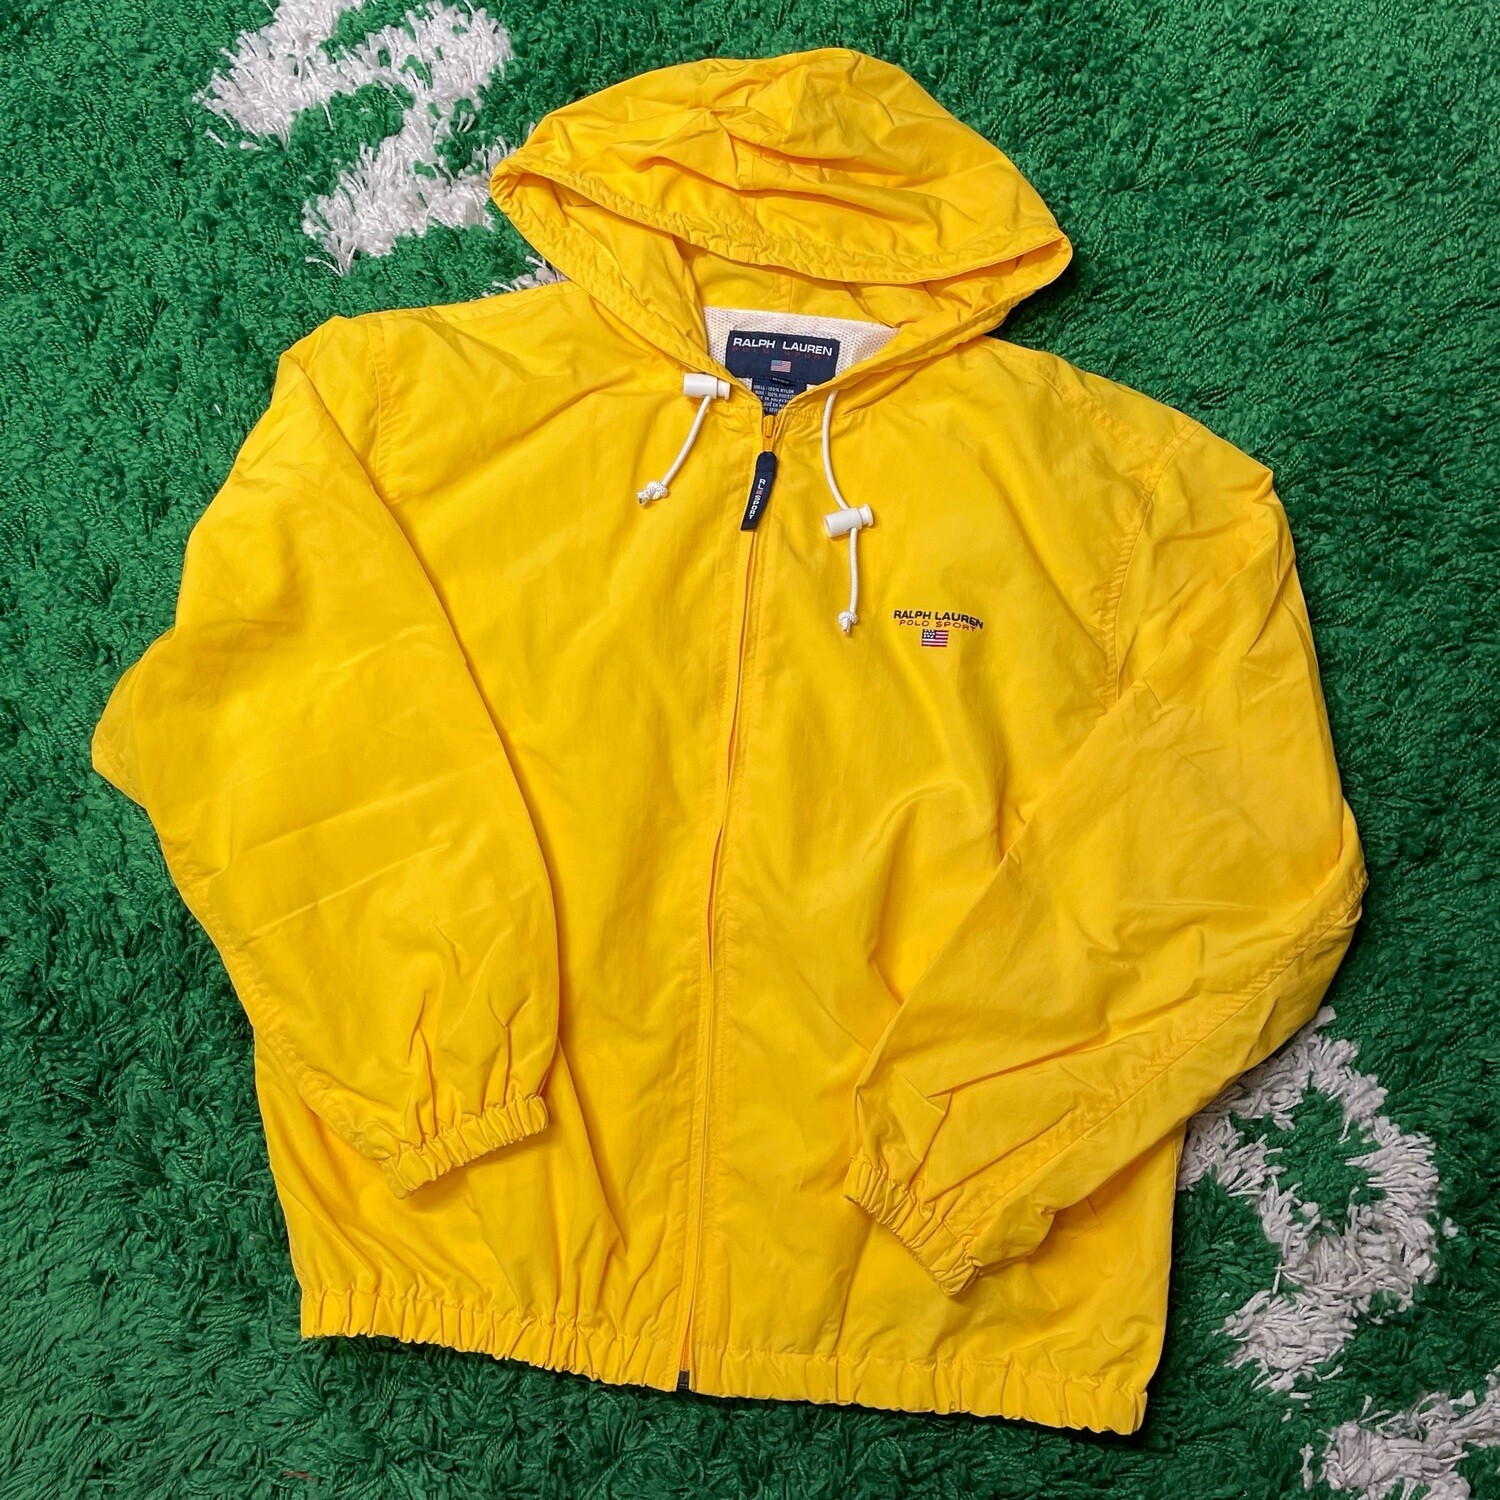 Polo Sport Yellow Zip Up Jacket Size Medium